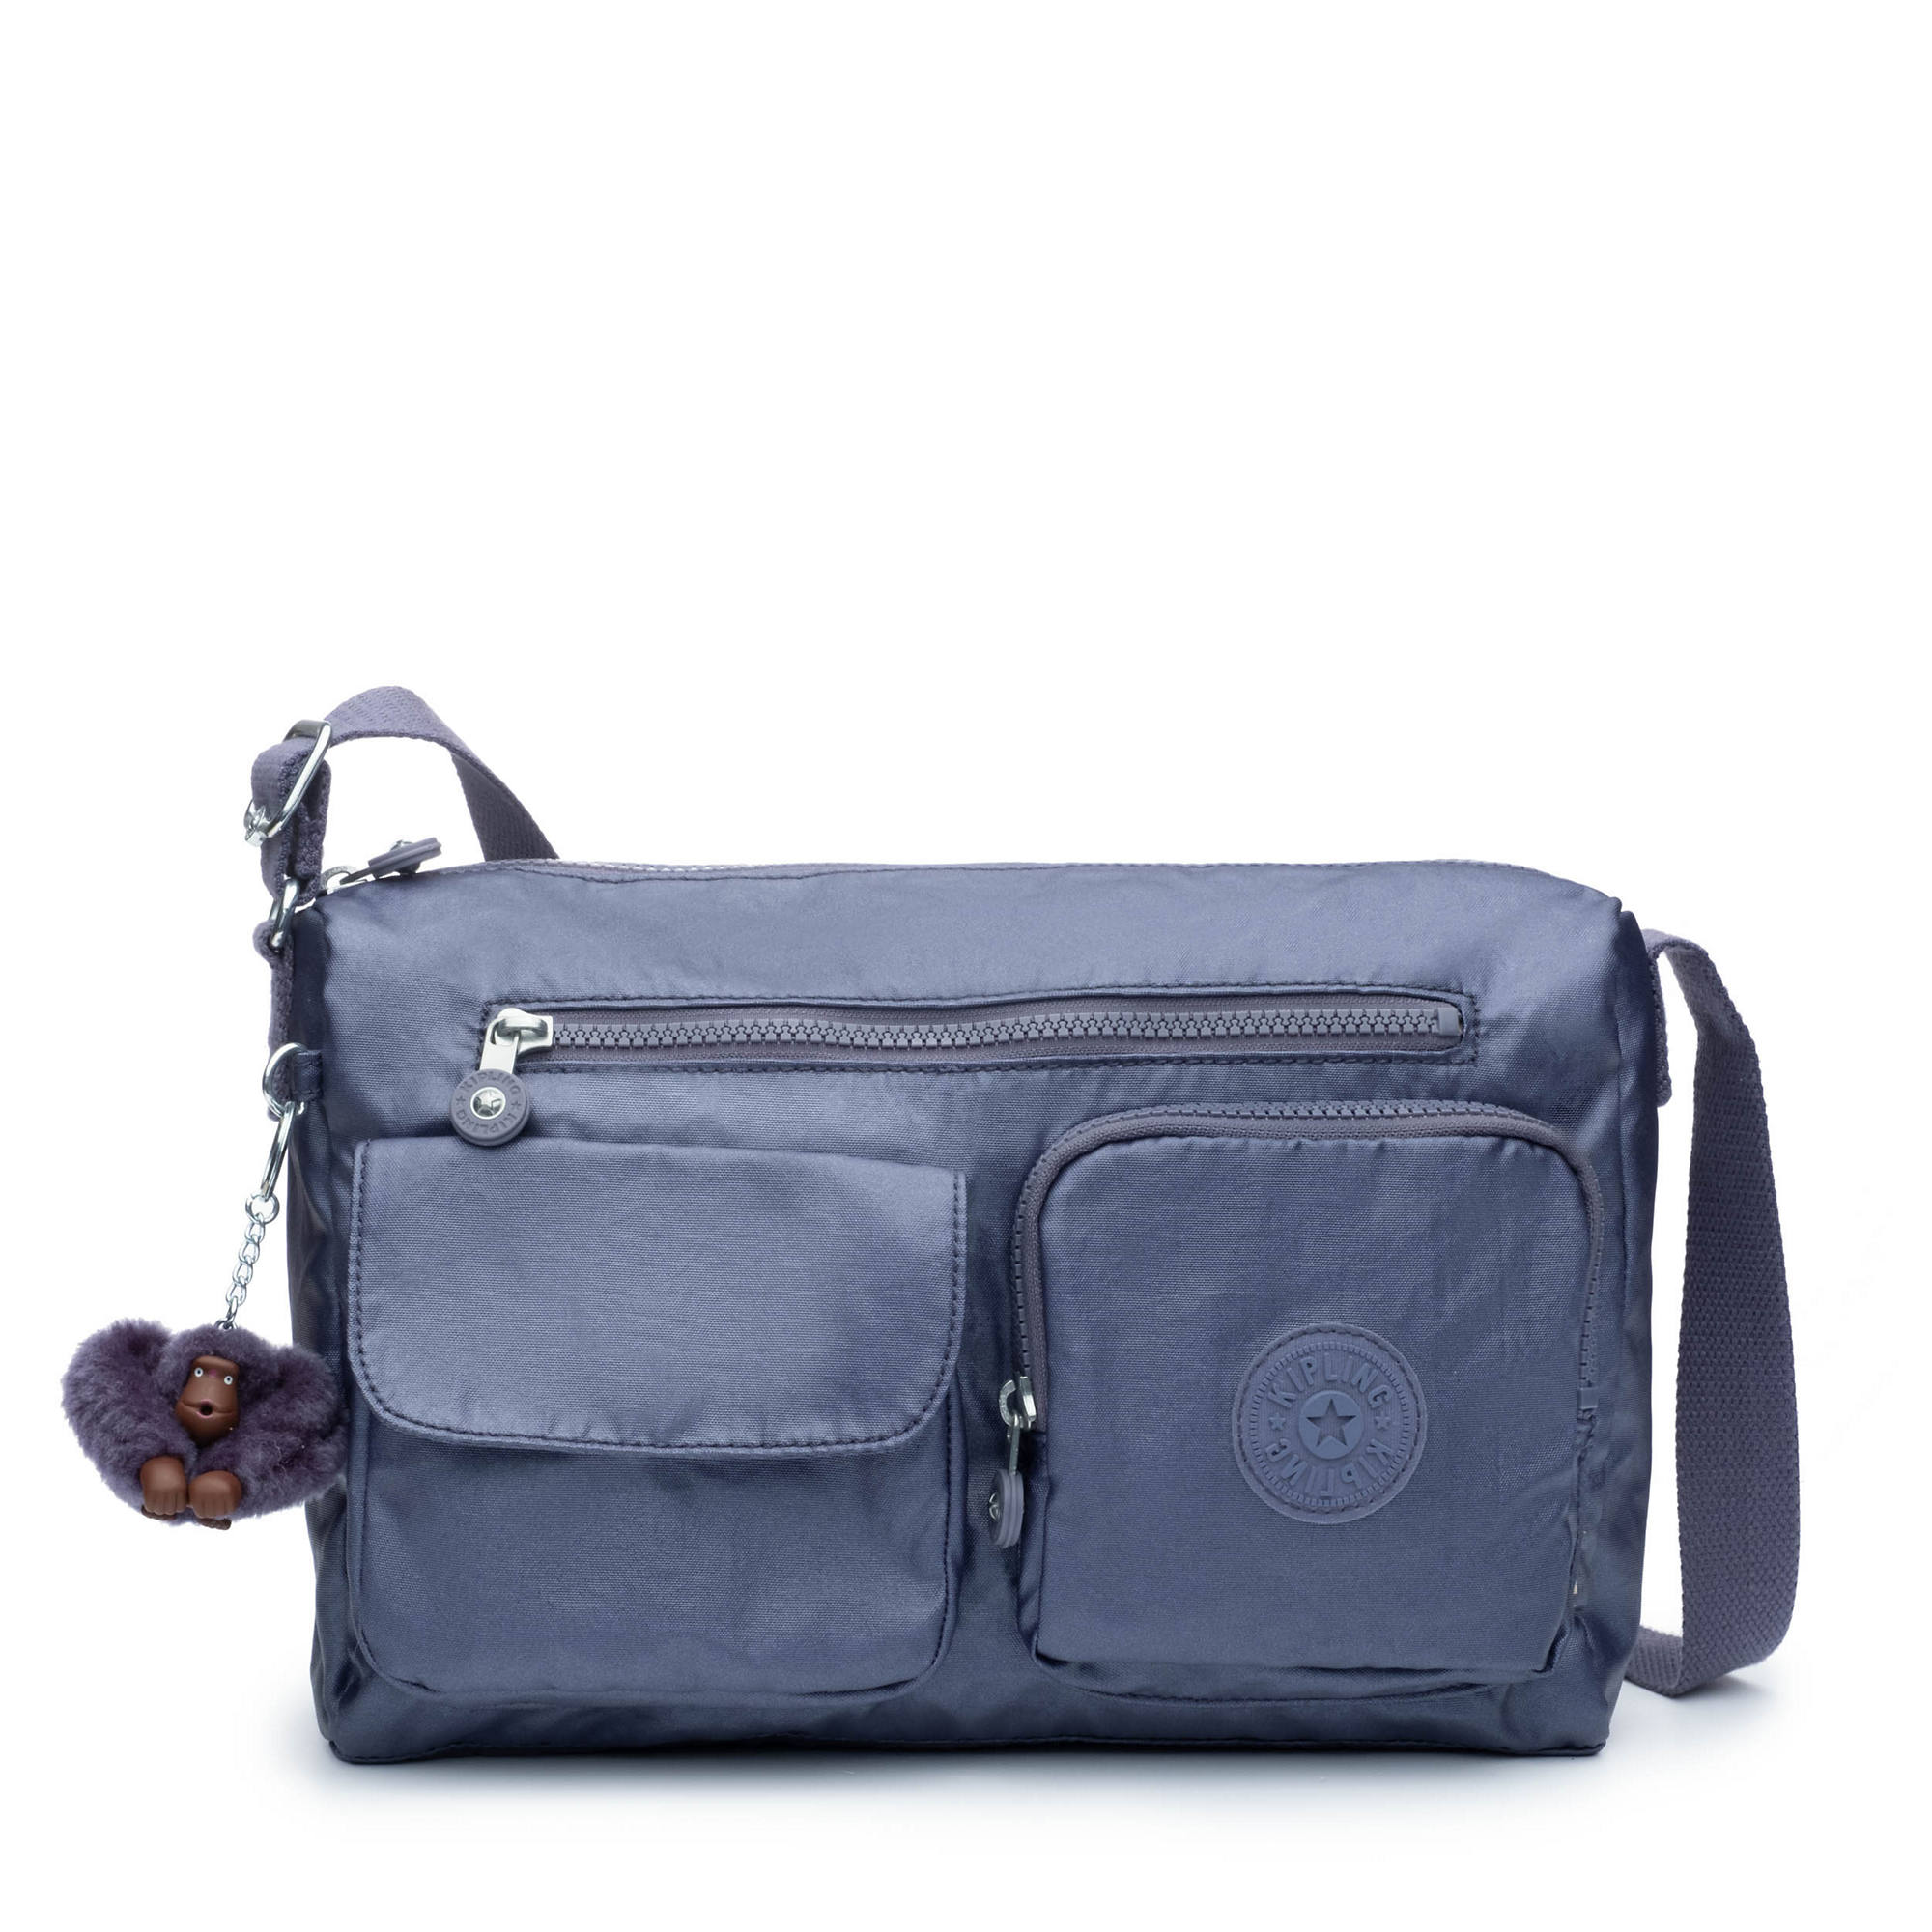 Kipling Jean Crossbody Bag | eBay